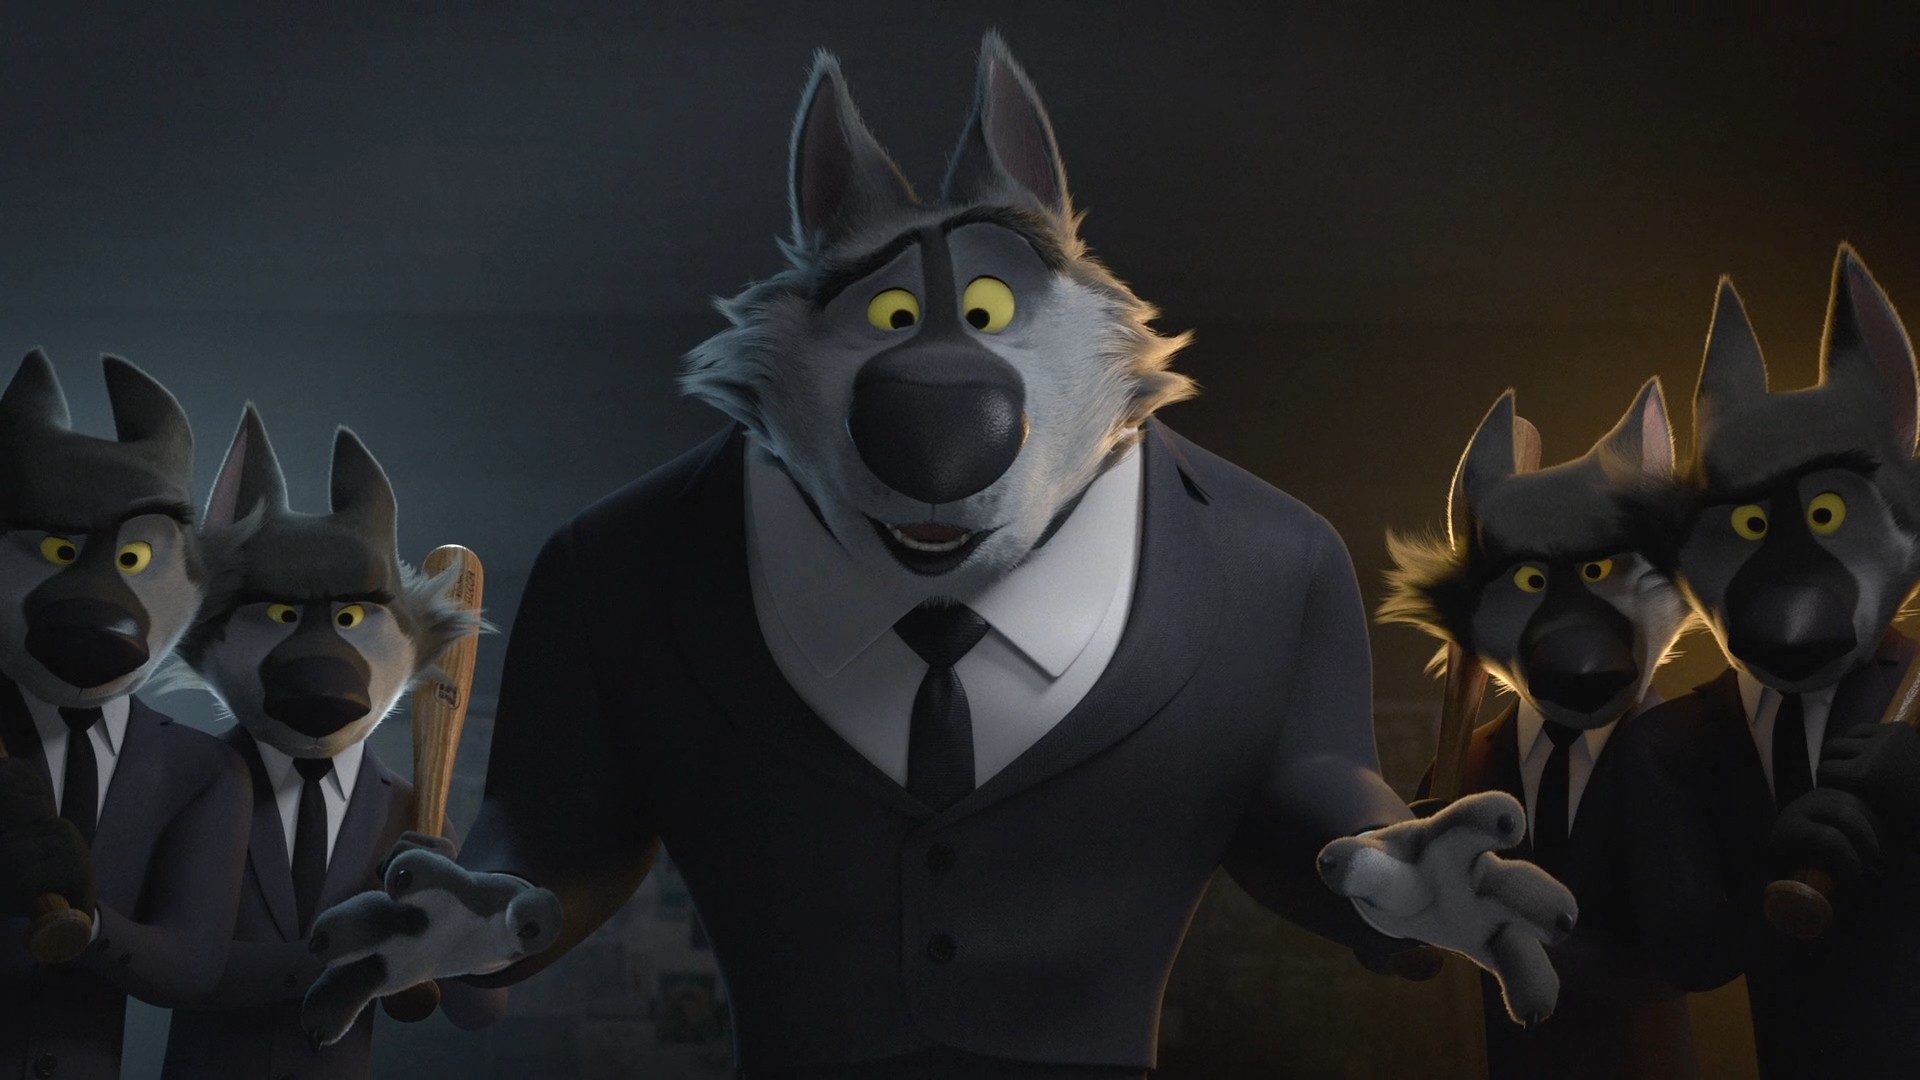 General 1920x1080 Rock Dog Anthro animals wolf CGI cartoon movies clothing suits tie baseball bat gangster screen shot